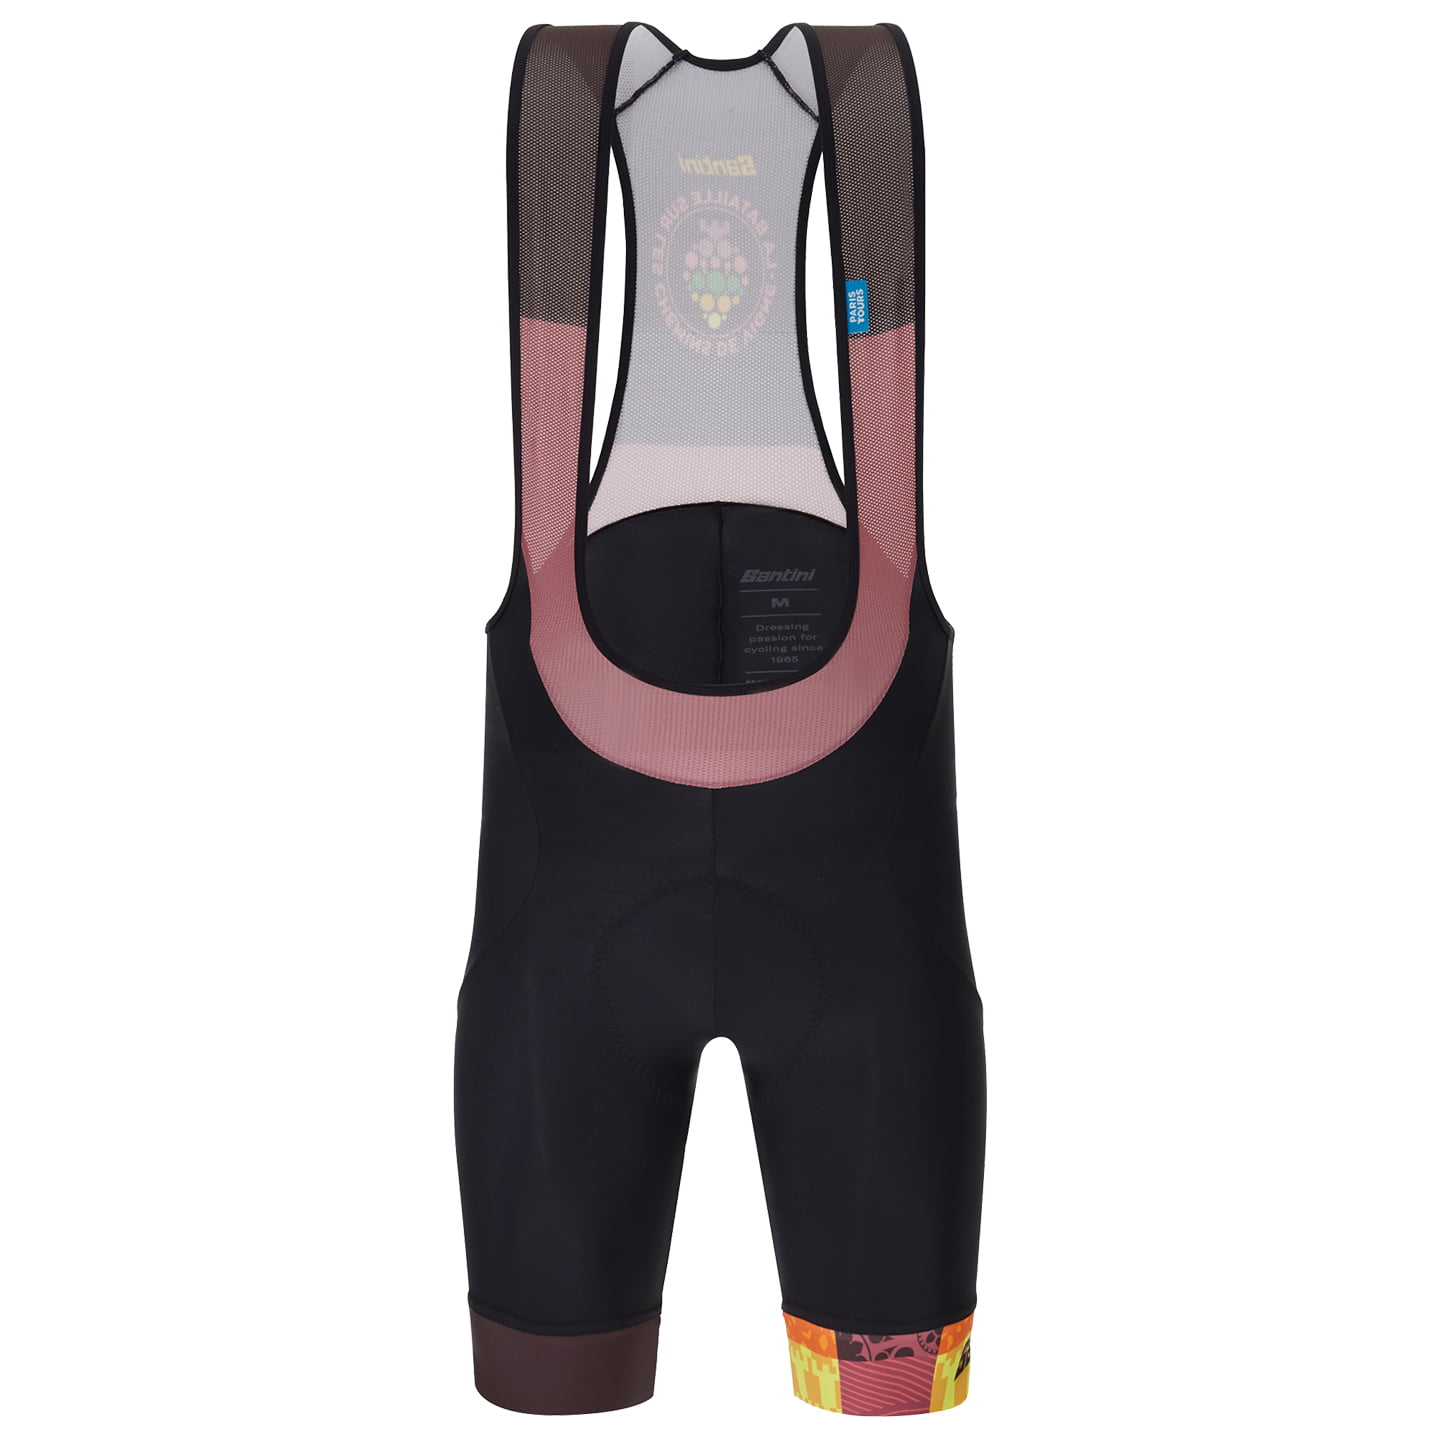 SANTINI Paris-Tours Vigne 2023 Bib Shorts, for men, size S, Cycle shorts, Cycling clothing